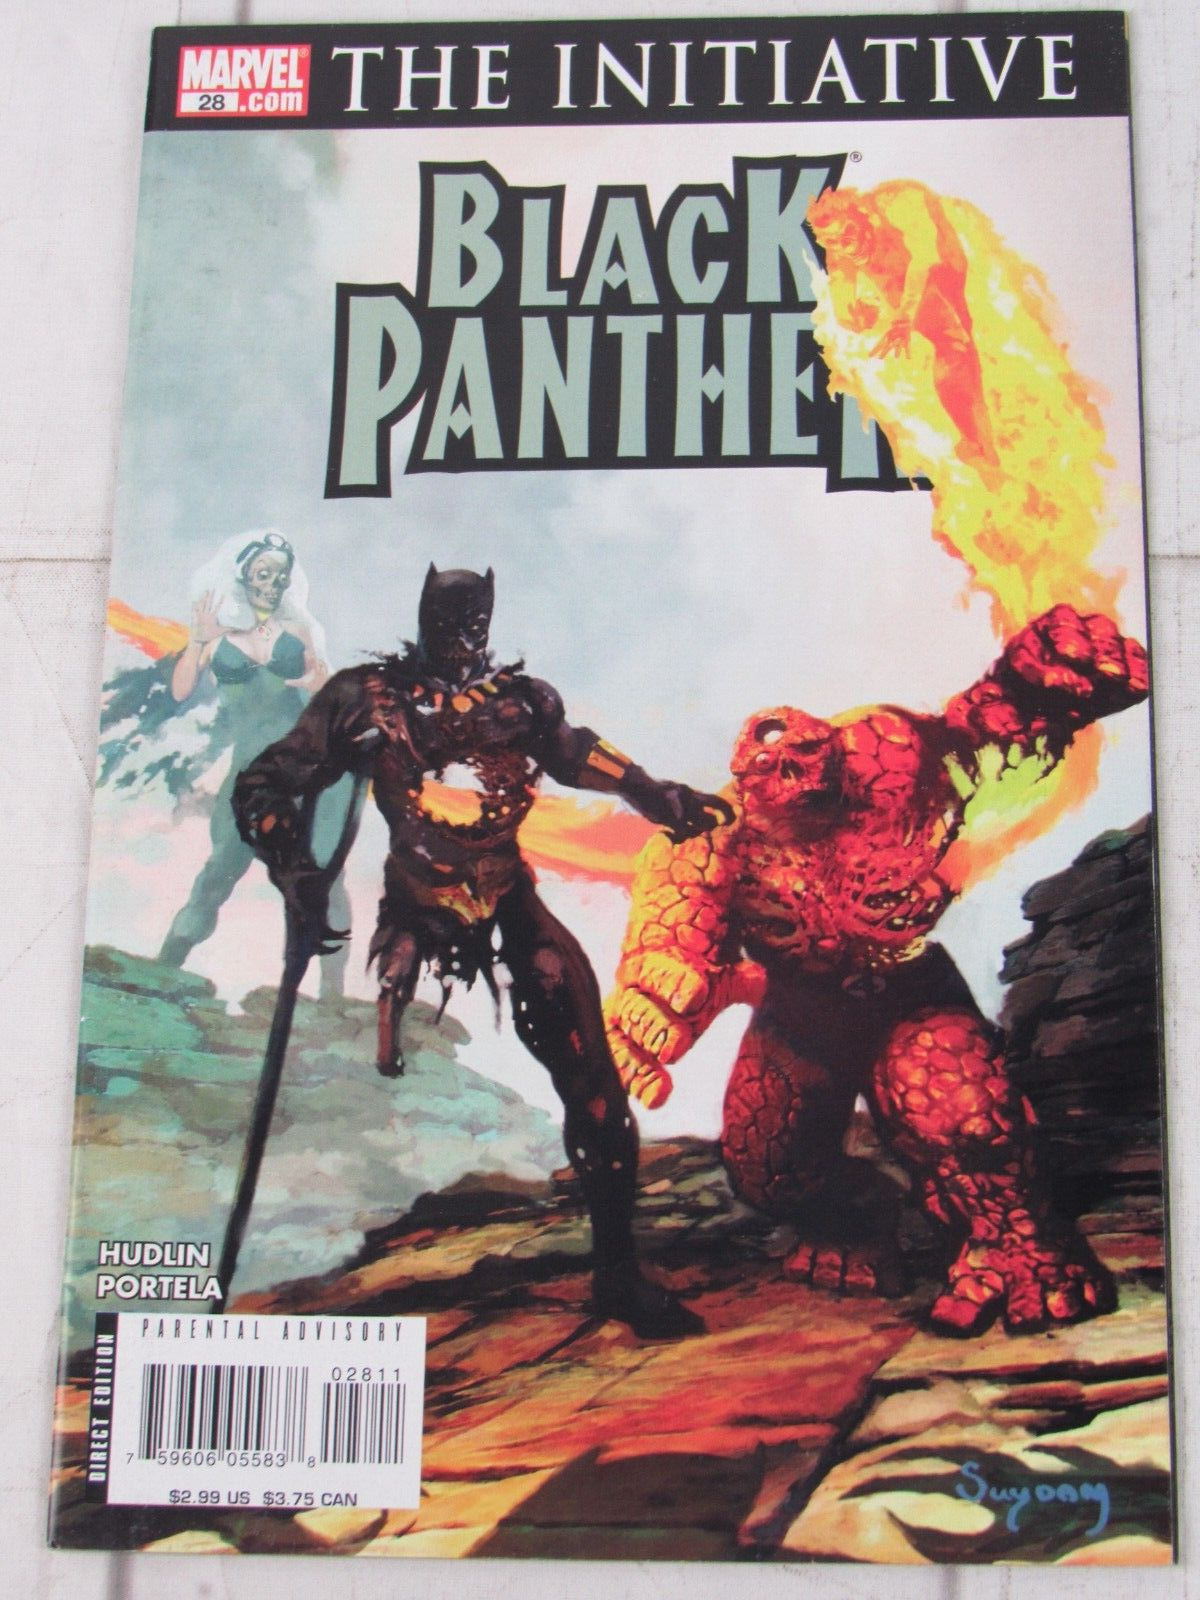 Black Panther #28 July 2007 Marvel Comics